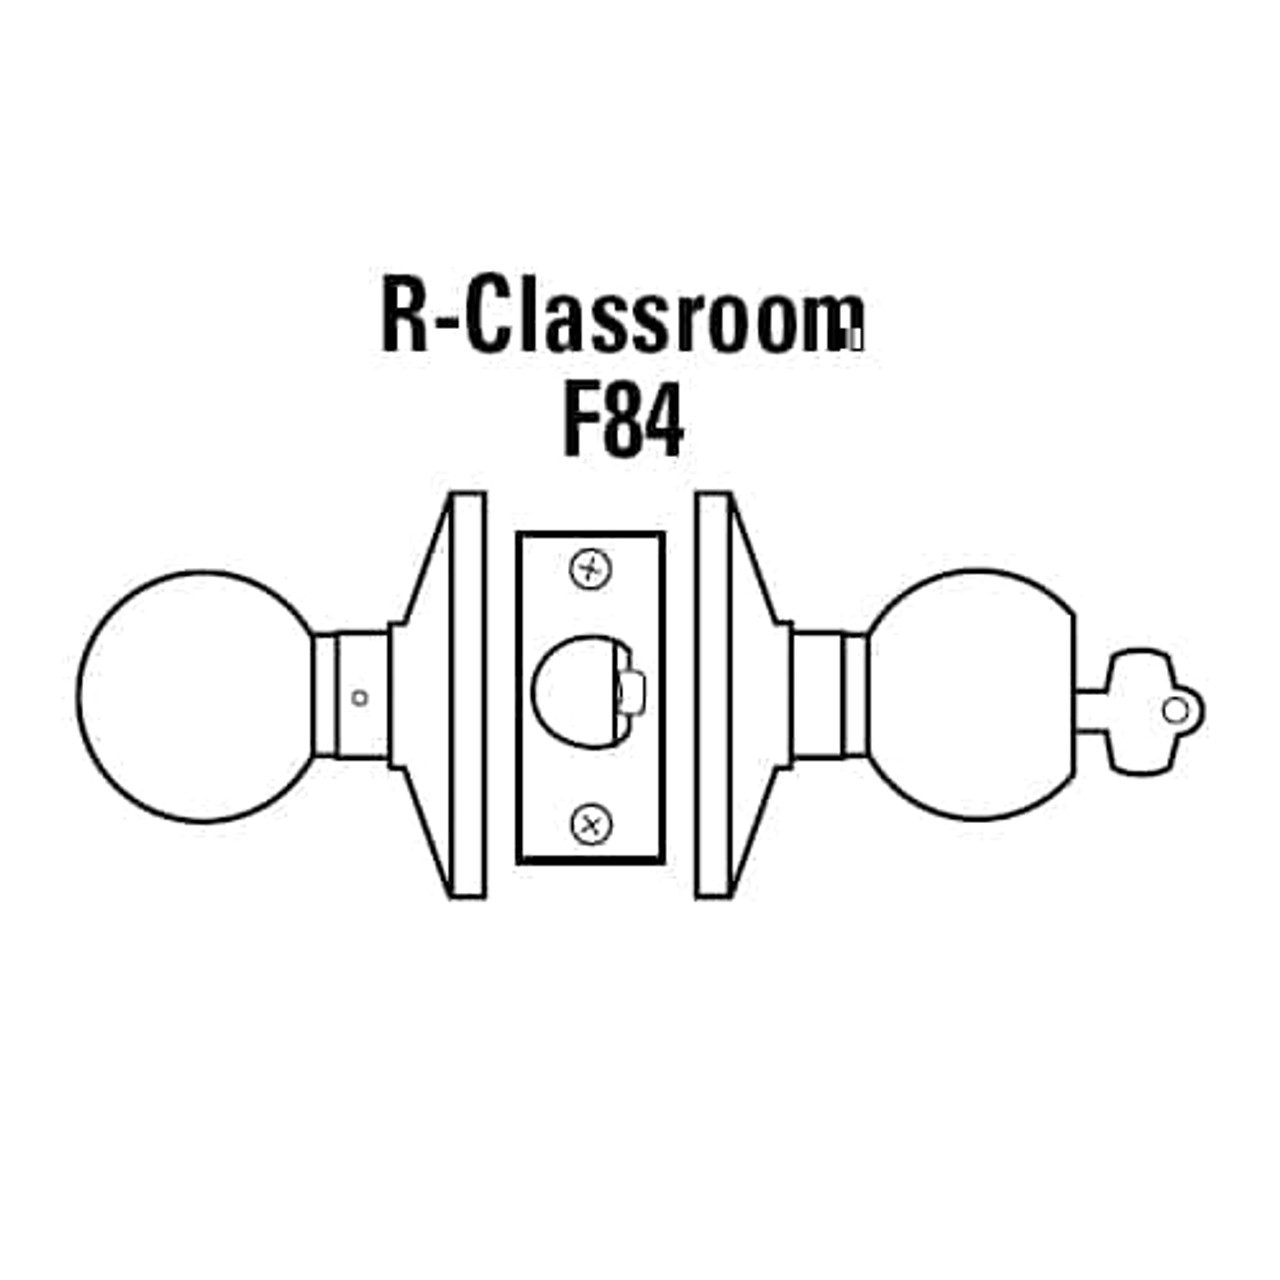 6K37R4CS3626 Best 6K Series Medium Duty Classroom Cylindrical Knob Locks with Round Style in Satin Chrome